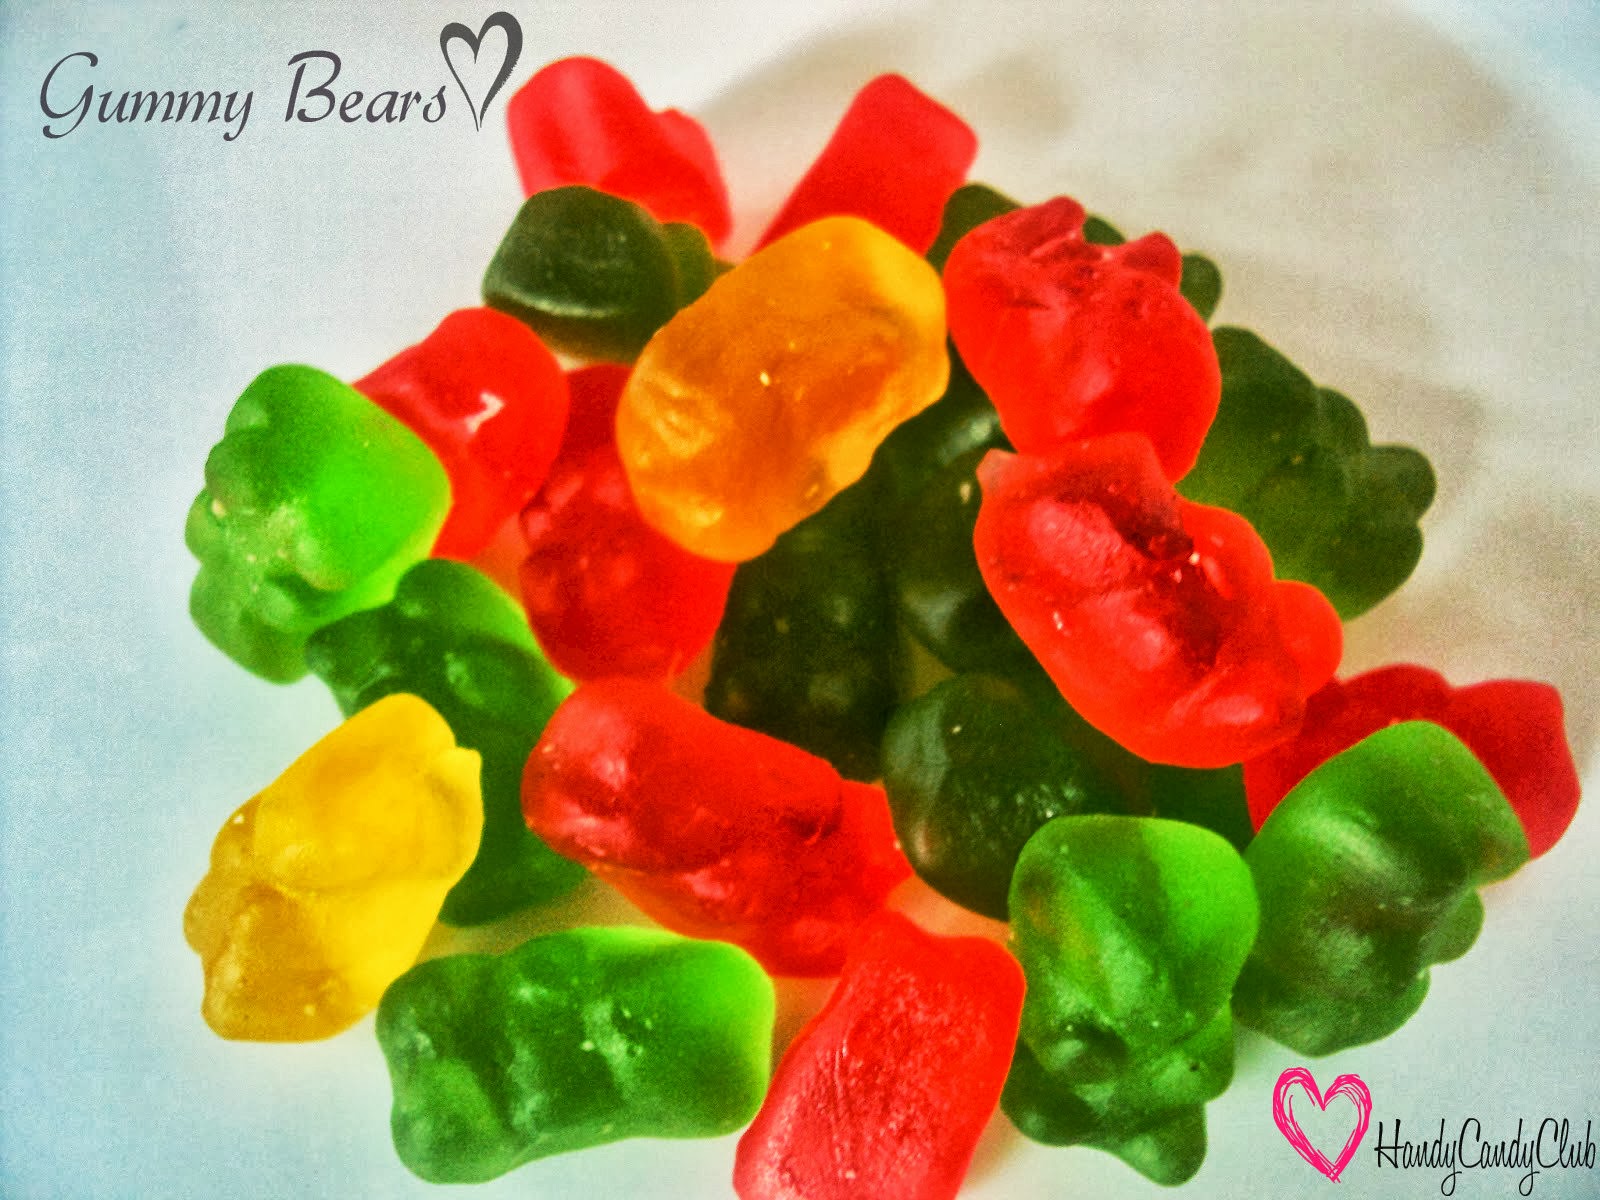 Related Cute Gummy Bear Wallpaper Rainbow